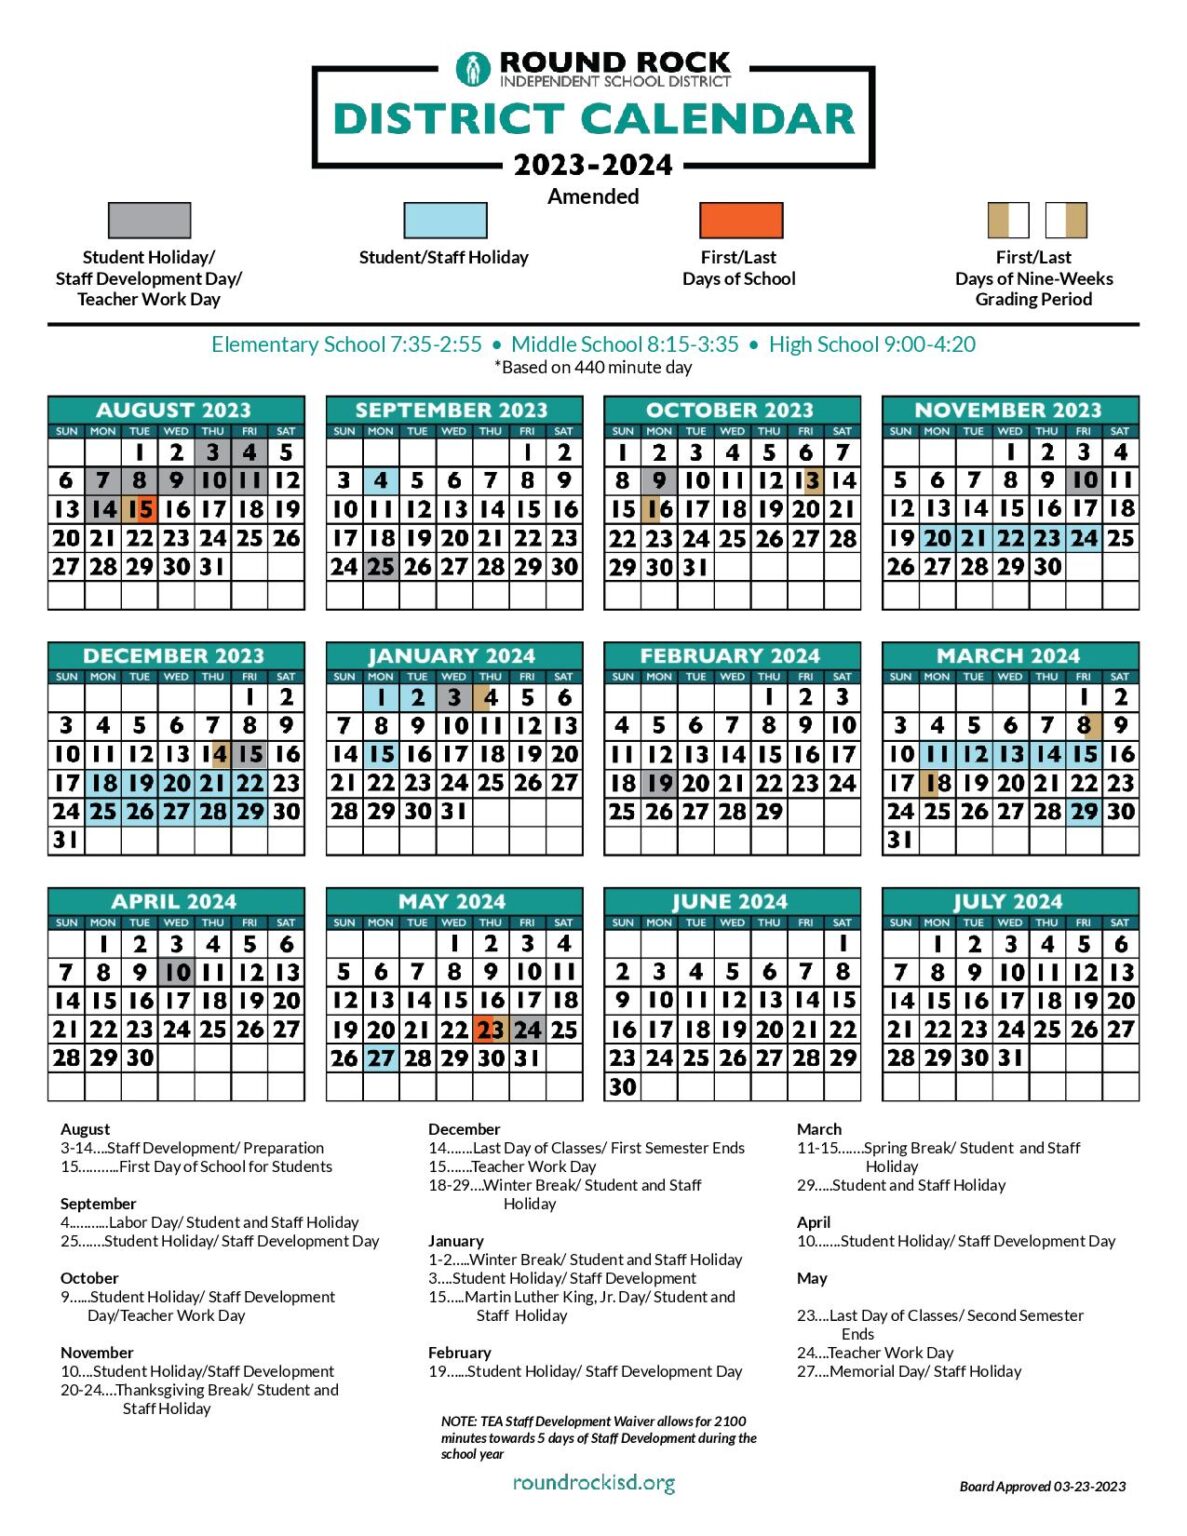 RRISD School Calendar 20232024 (Round Rock ISD)